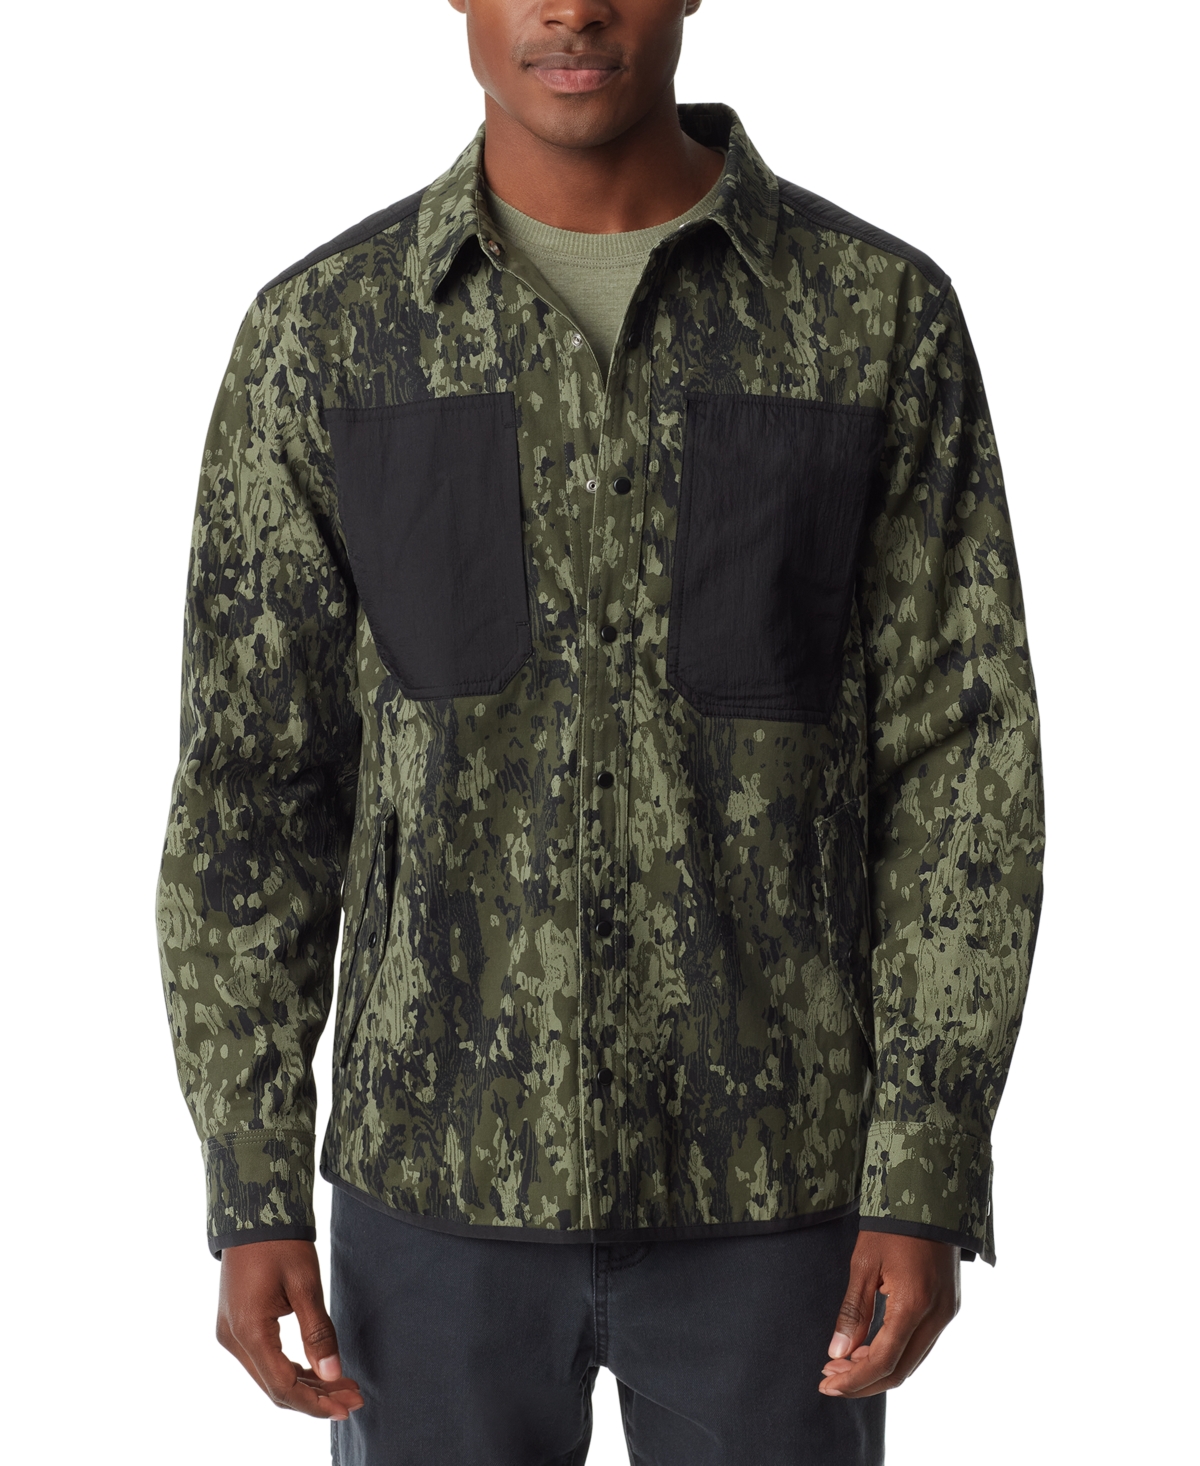 Men's Worker Standard-Fit Stretch Camouflage Shirt Jacket - Green Bark Camo